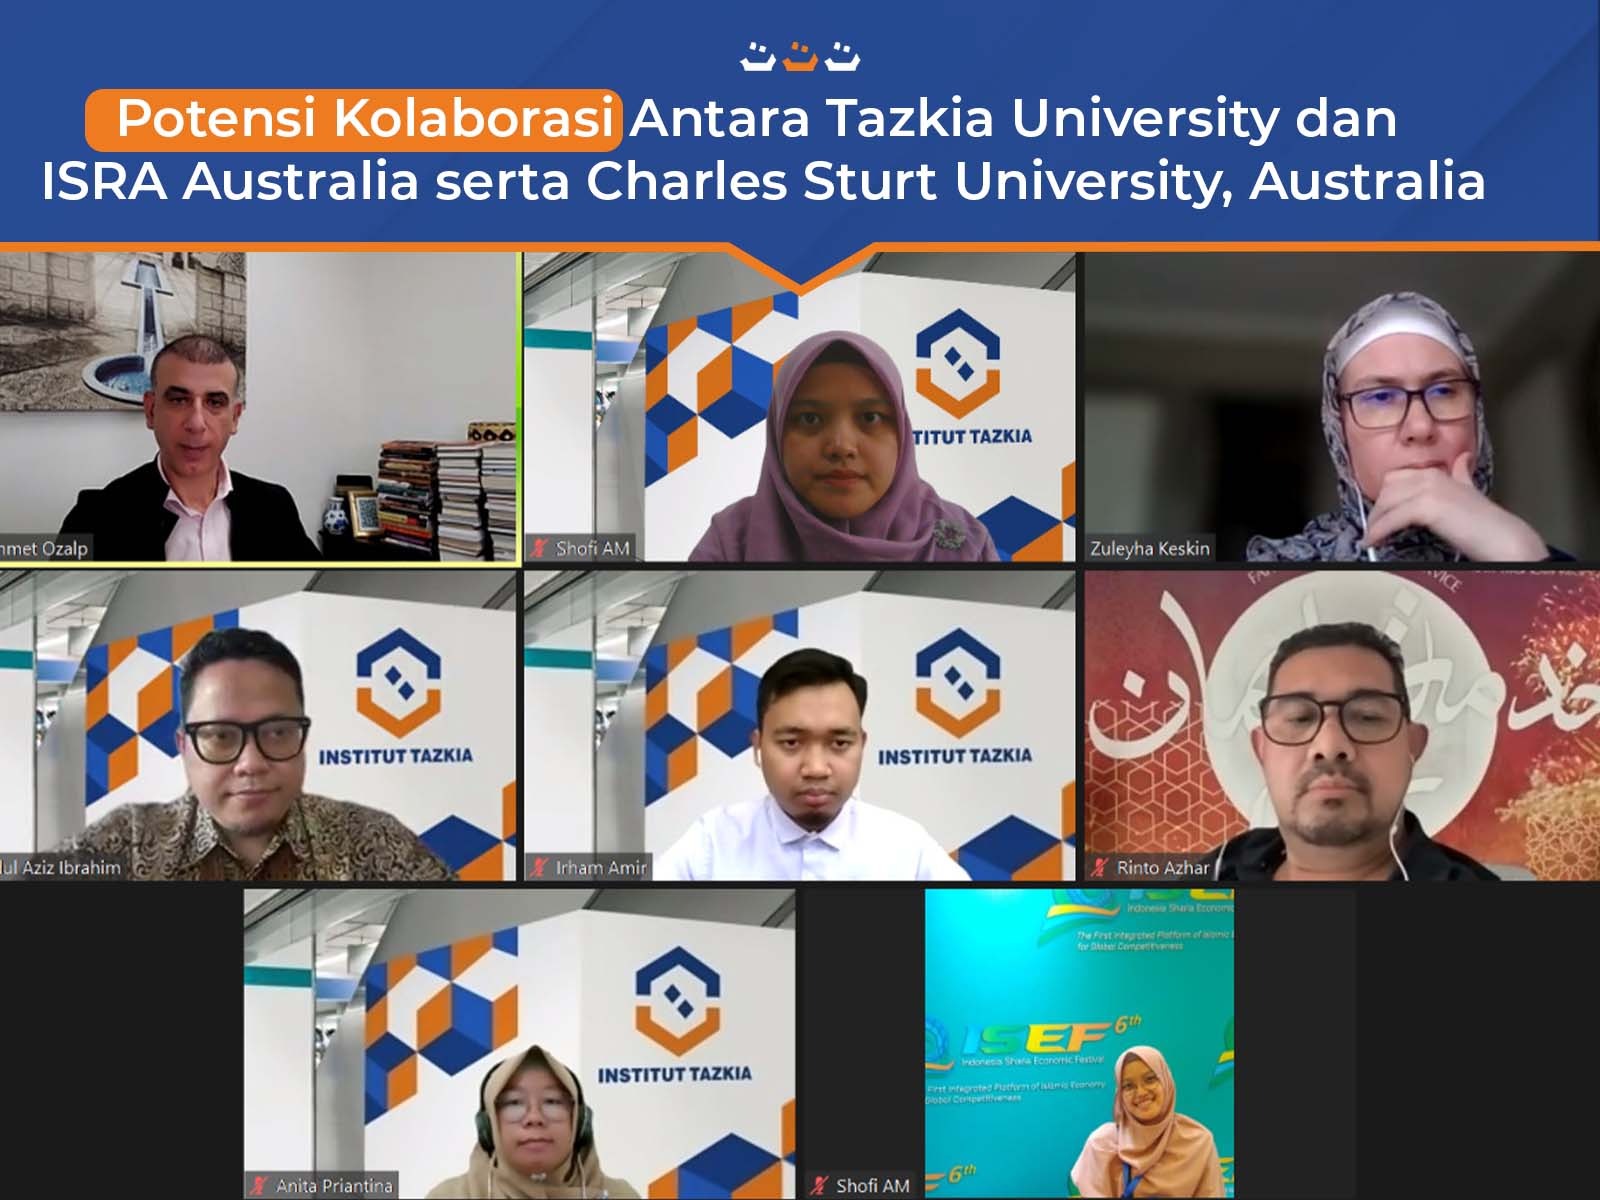 Potensi Kolaborasi Antara Tazkia University dan ISRA Australia serta Charles Sturt University, Australia